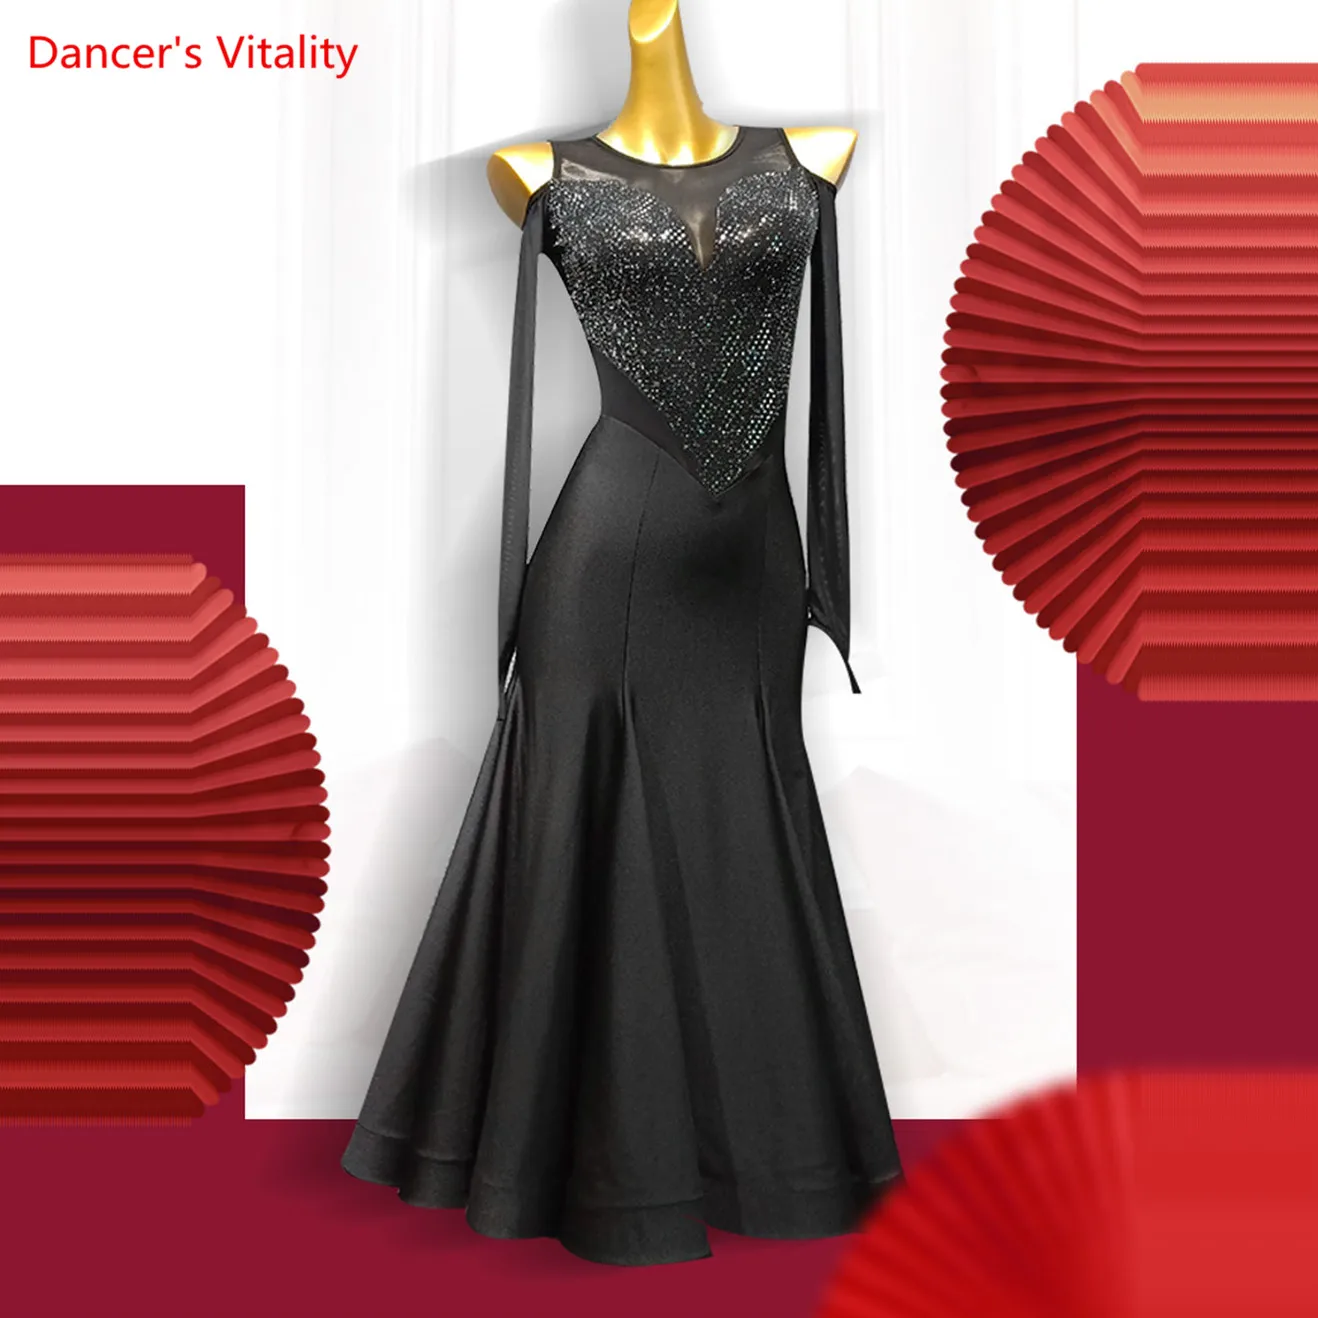 

Waltz Dress Rumba Standard Smooth Dance Dresses Standard Social Dress Ballroom Dance Competition Dress Sequins Spanish Costumes